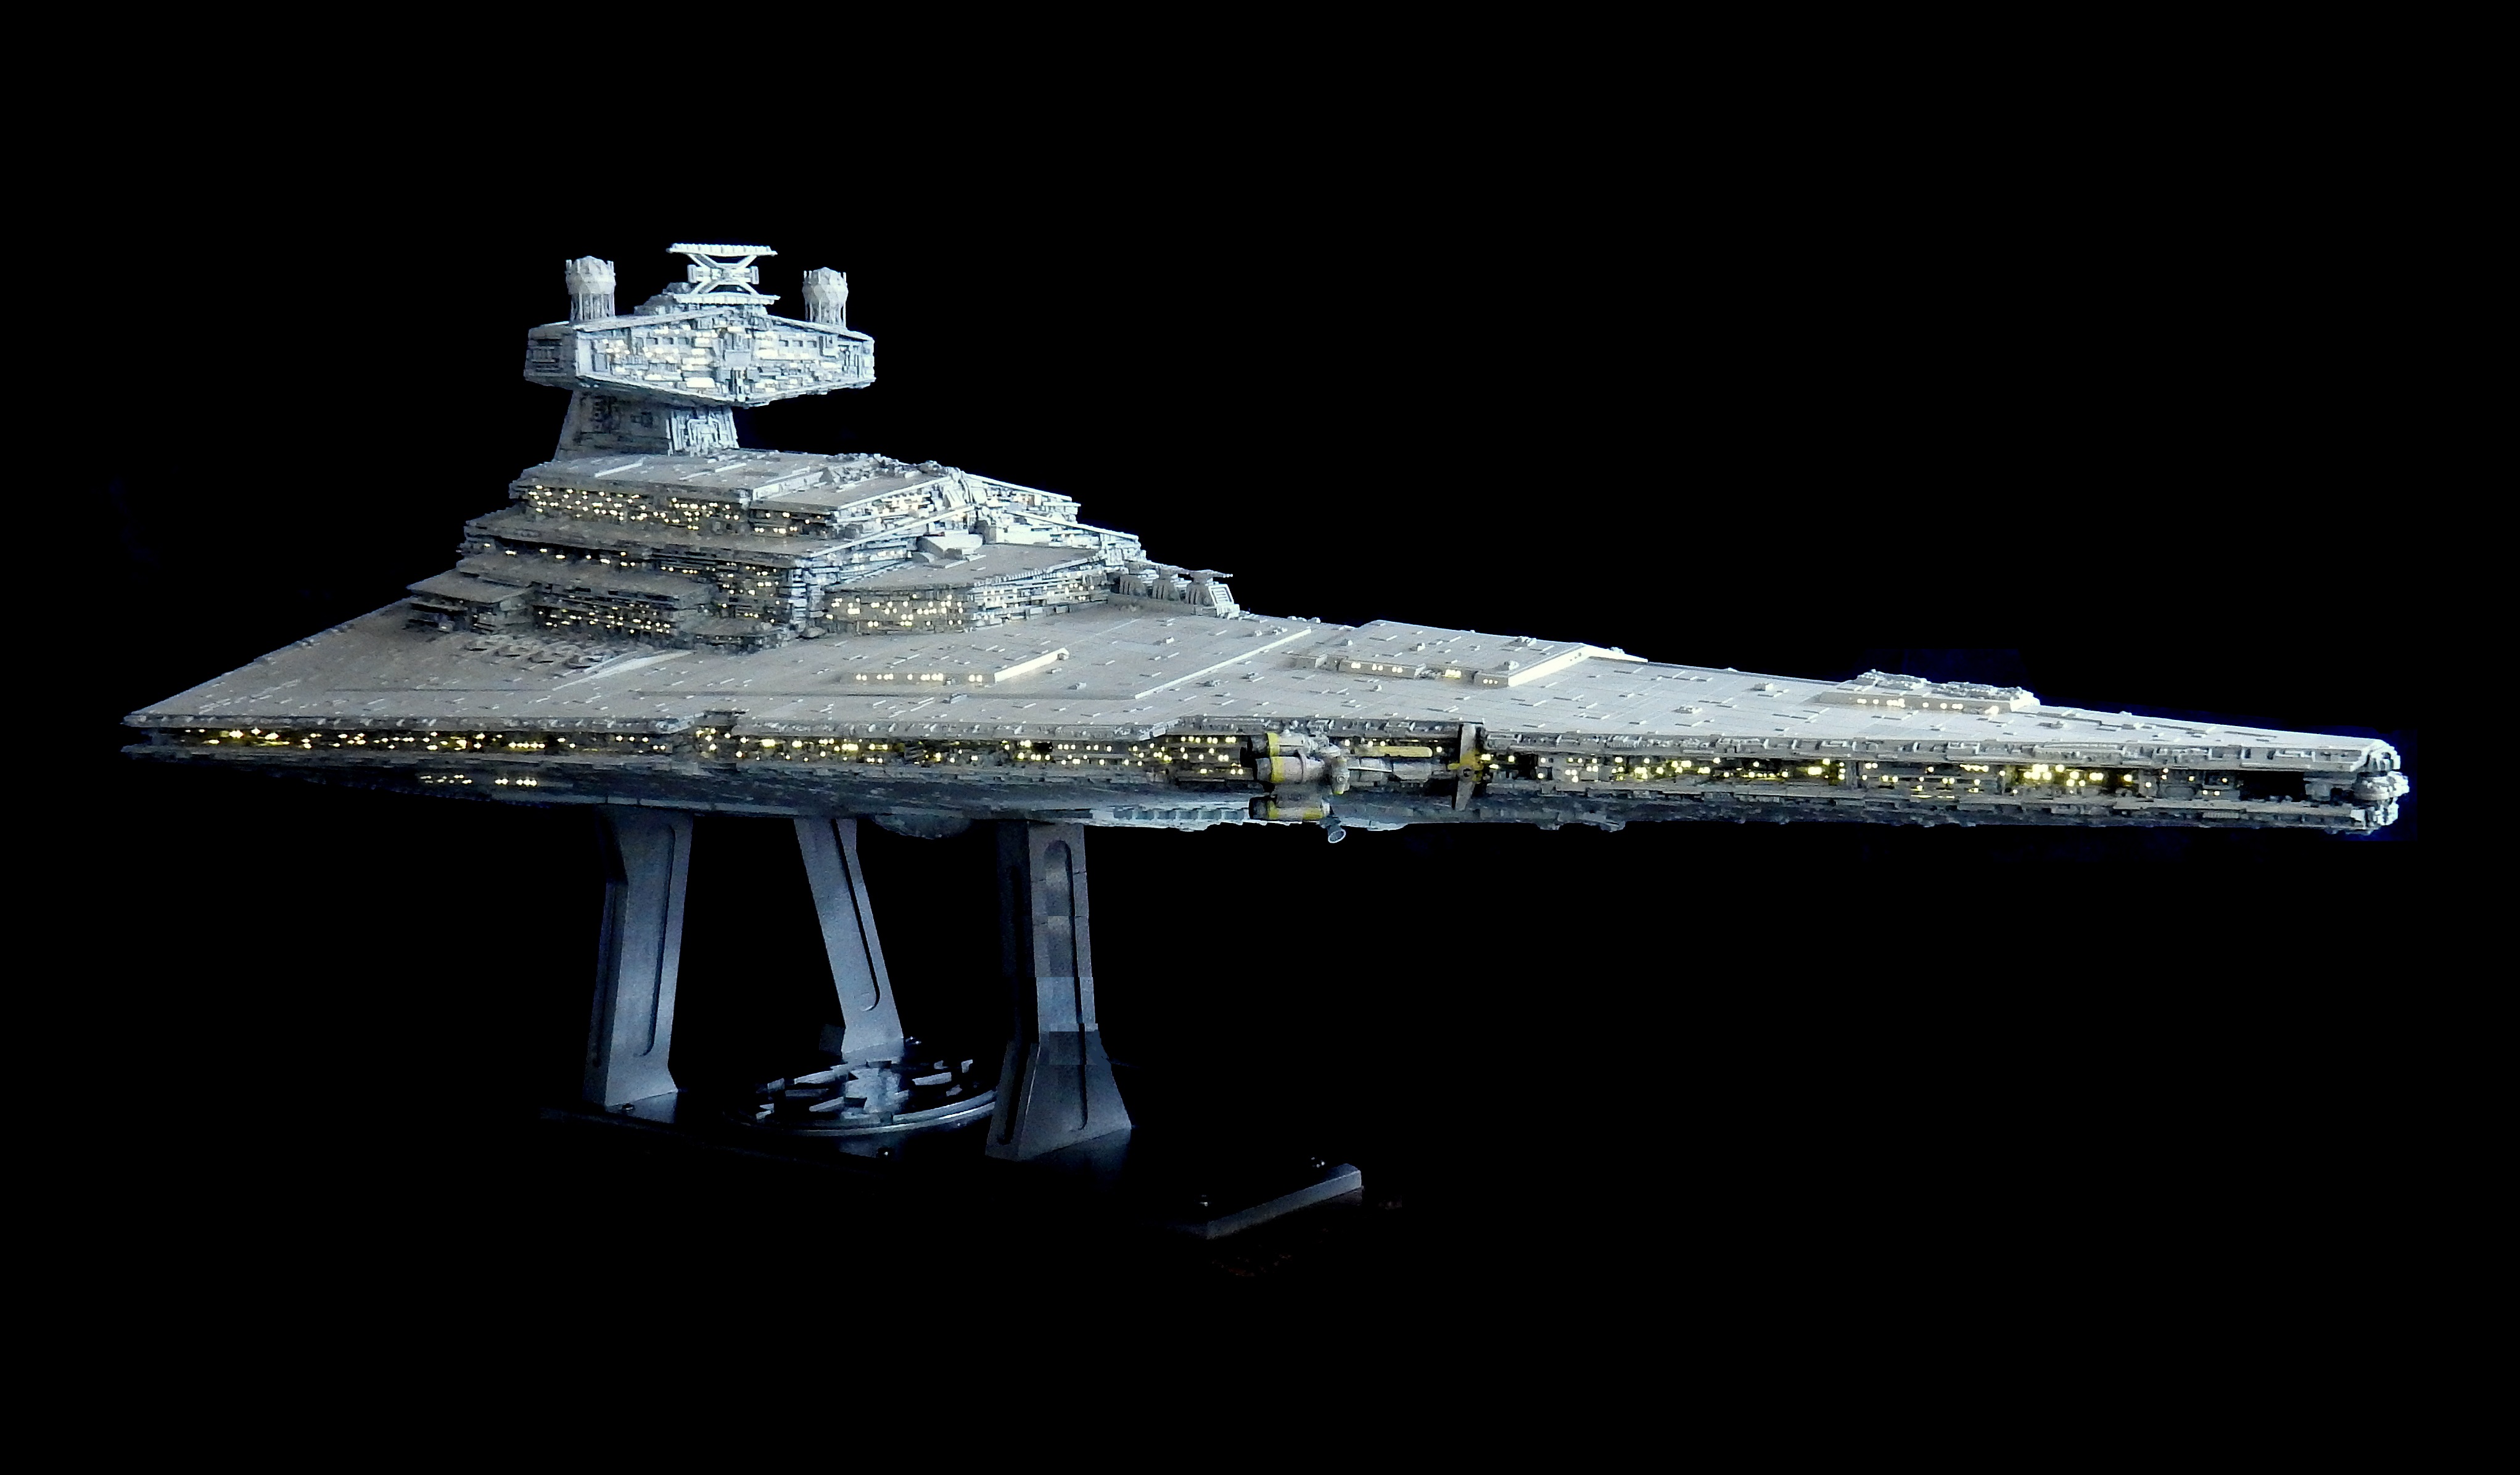 star destroyer model kit